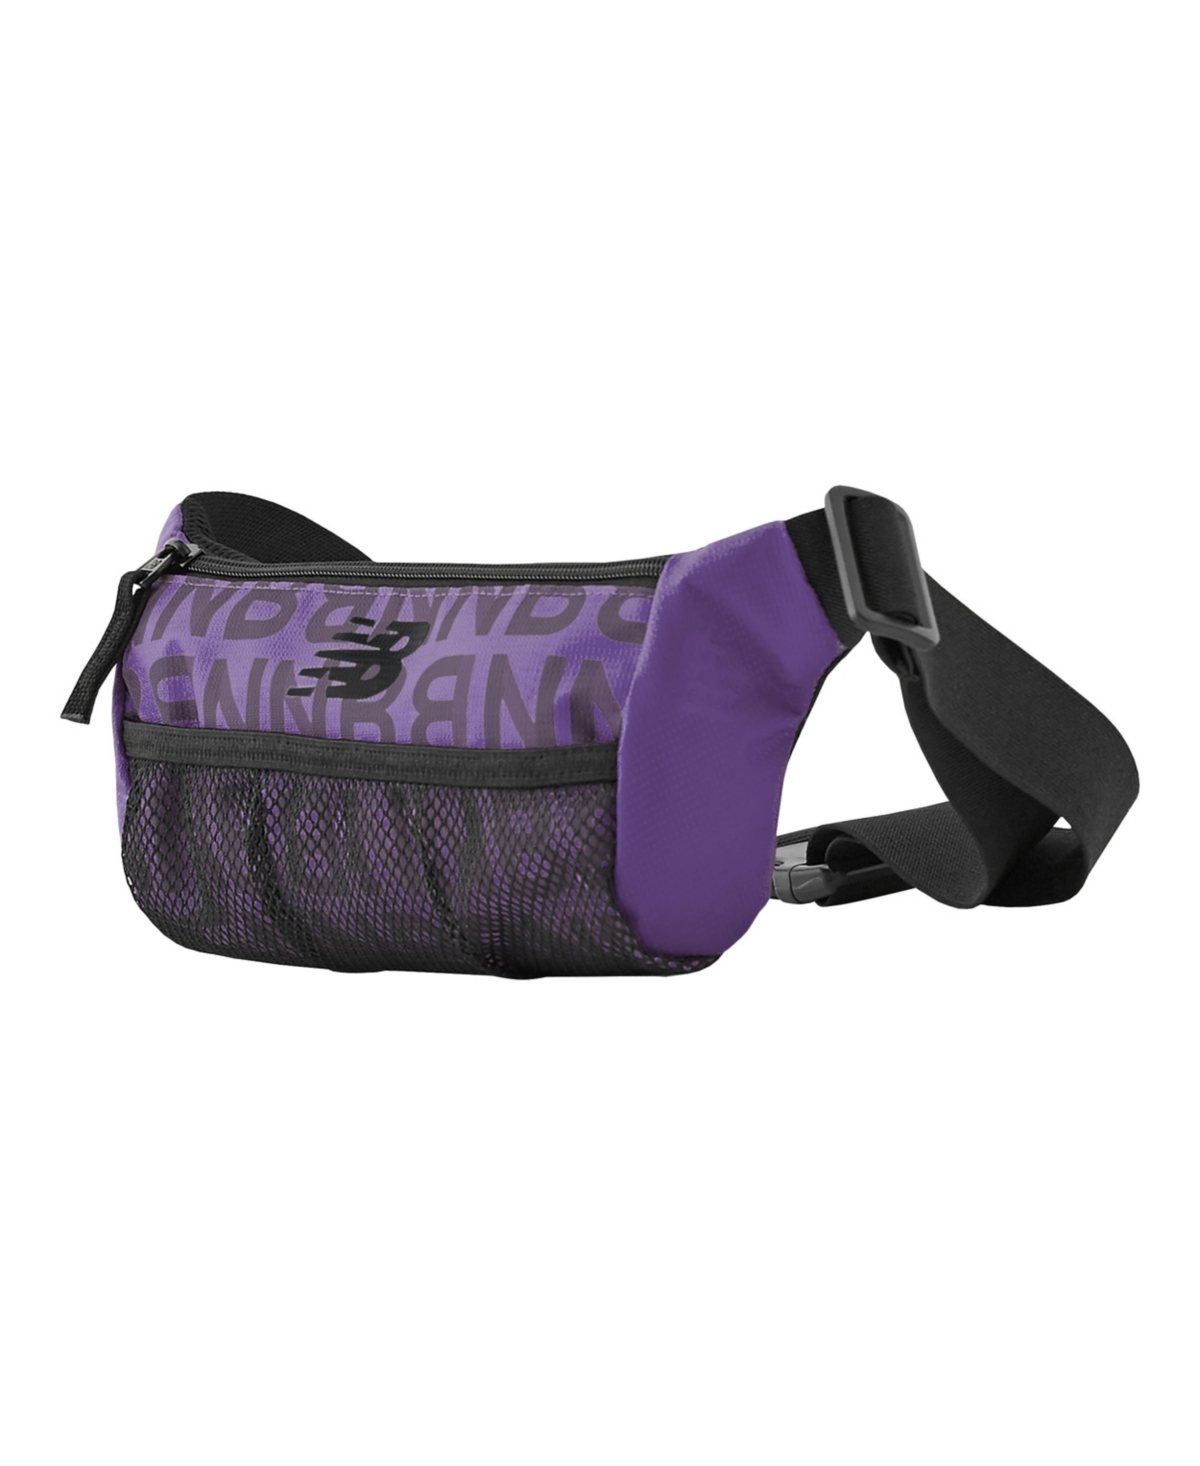 Opp Core Waist Bag, Small - Purple